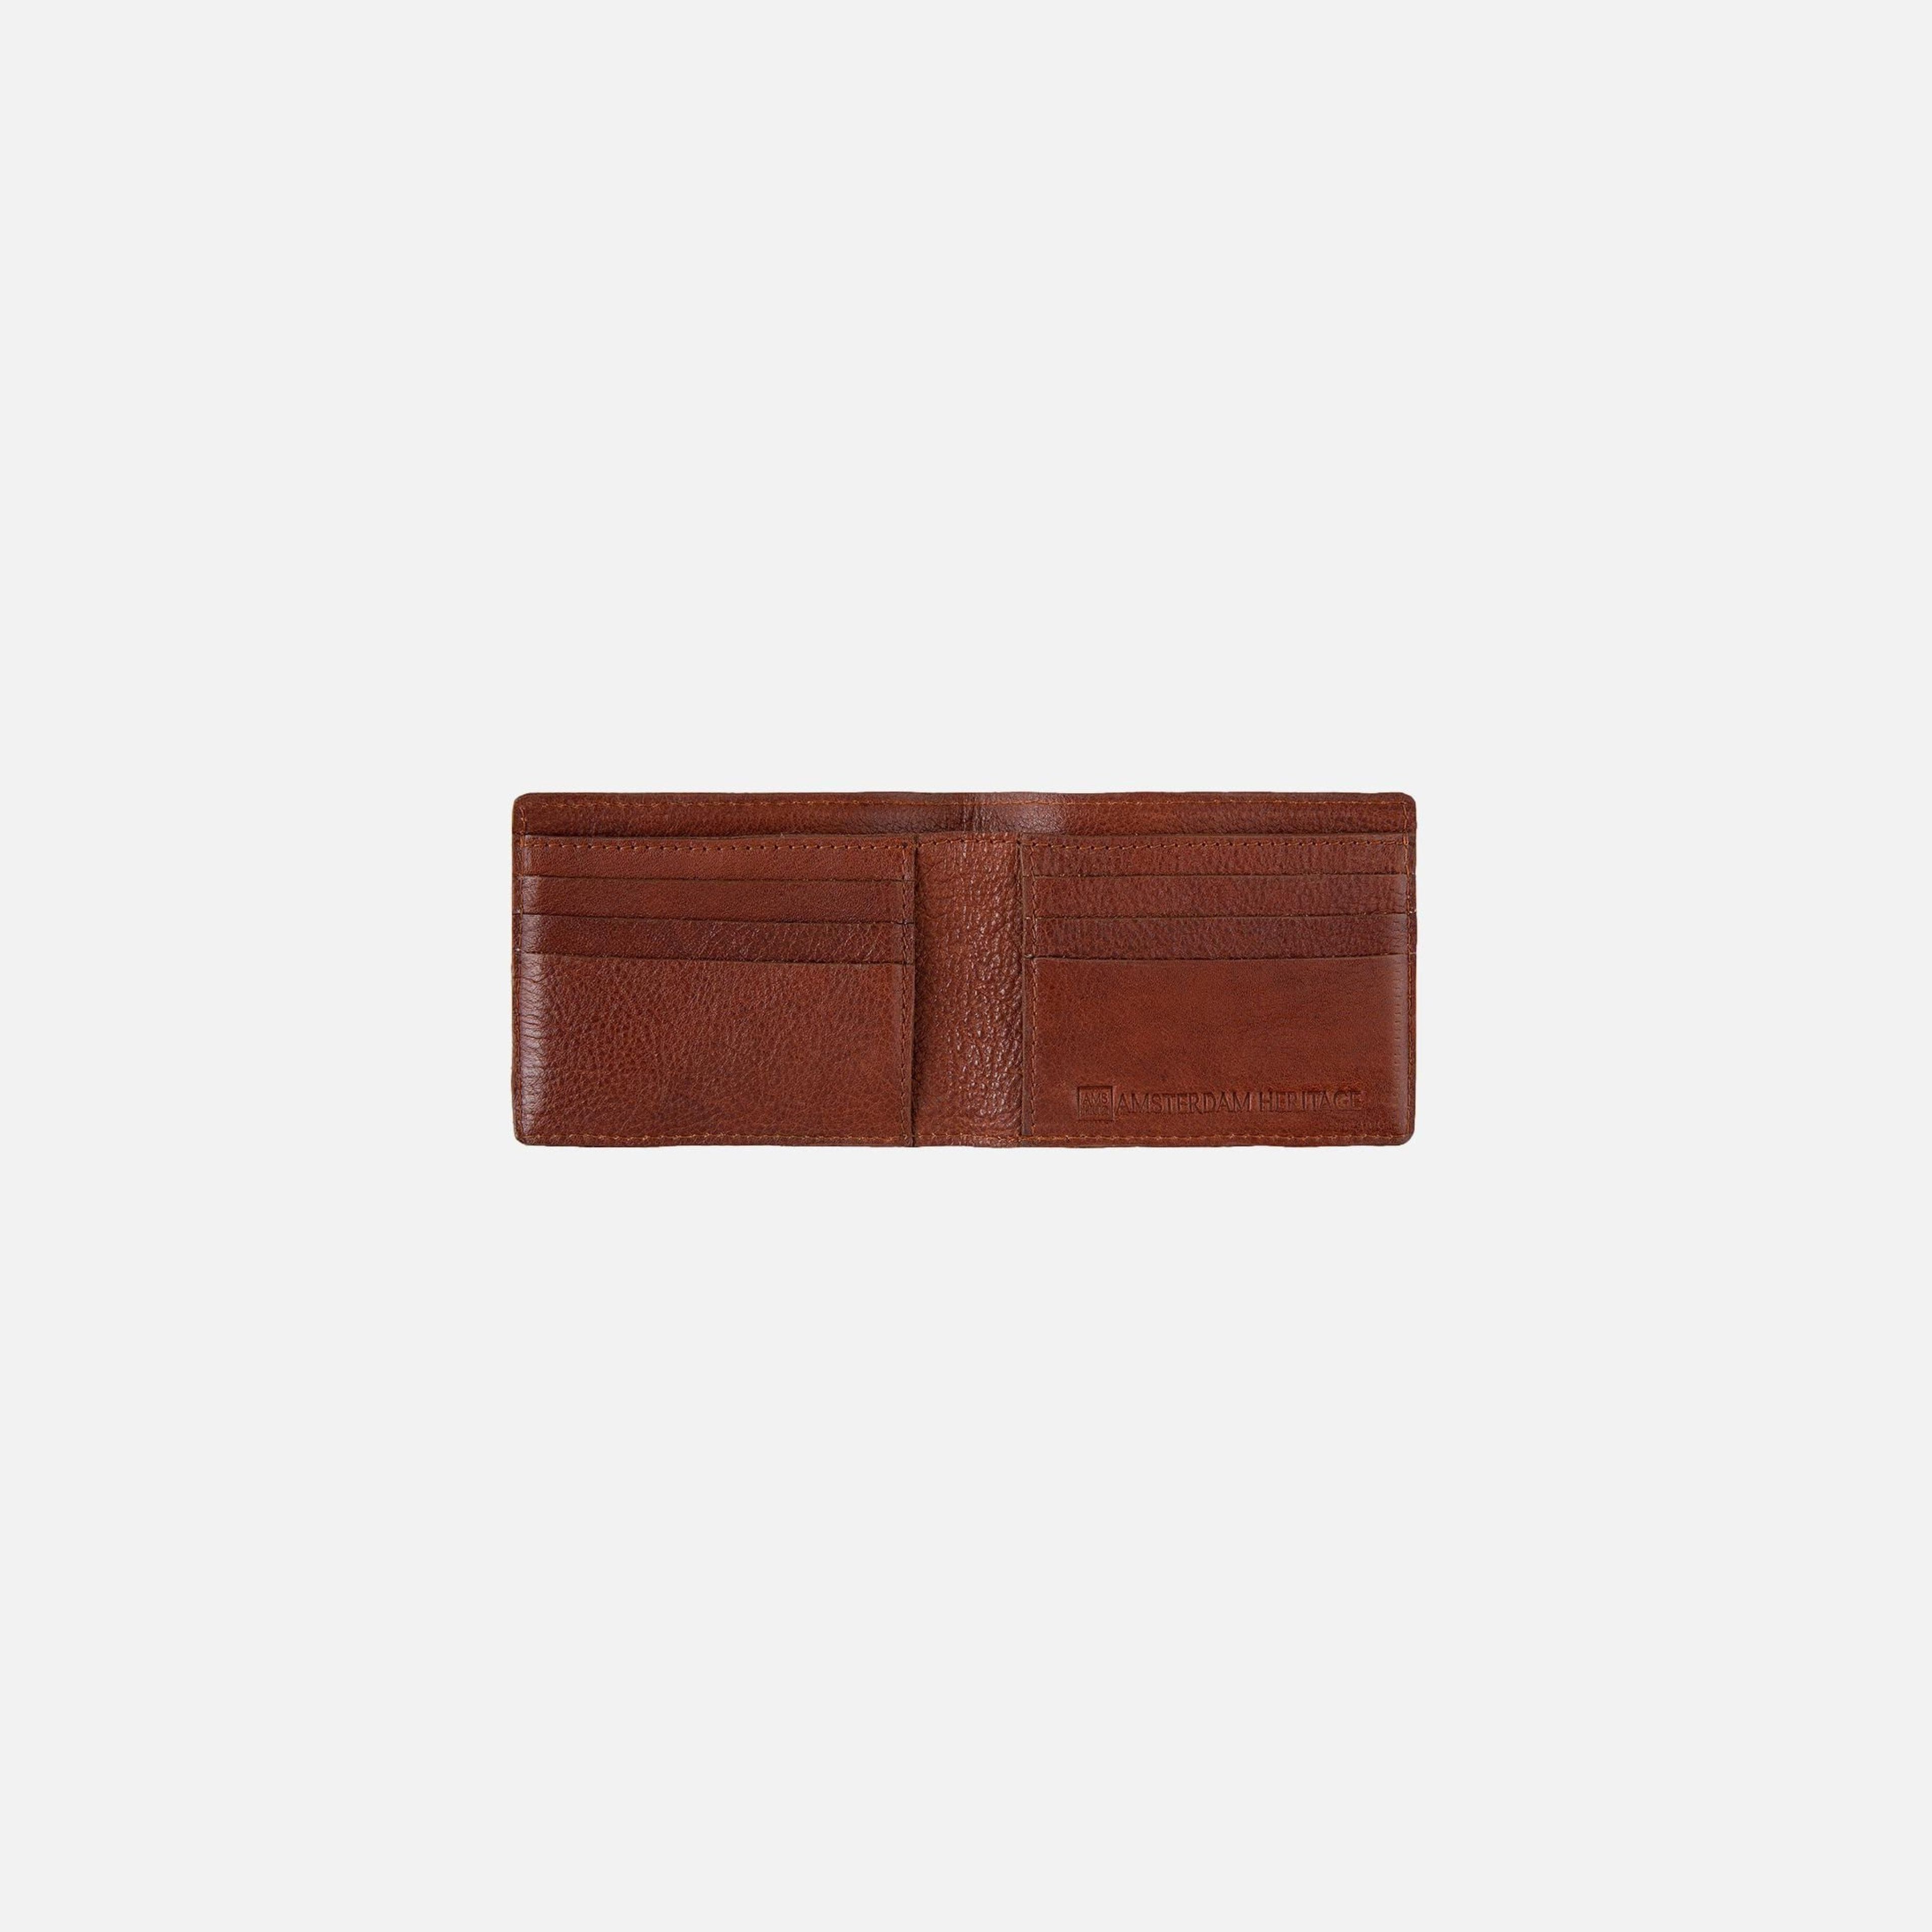 Kurt | Leather Wallet